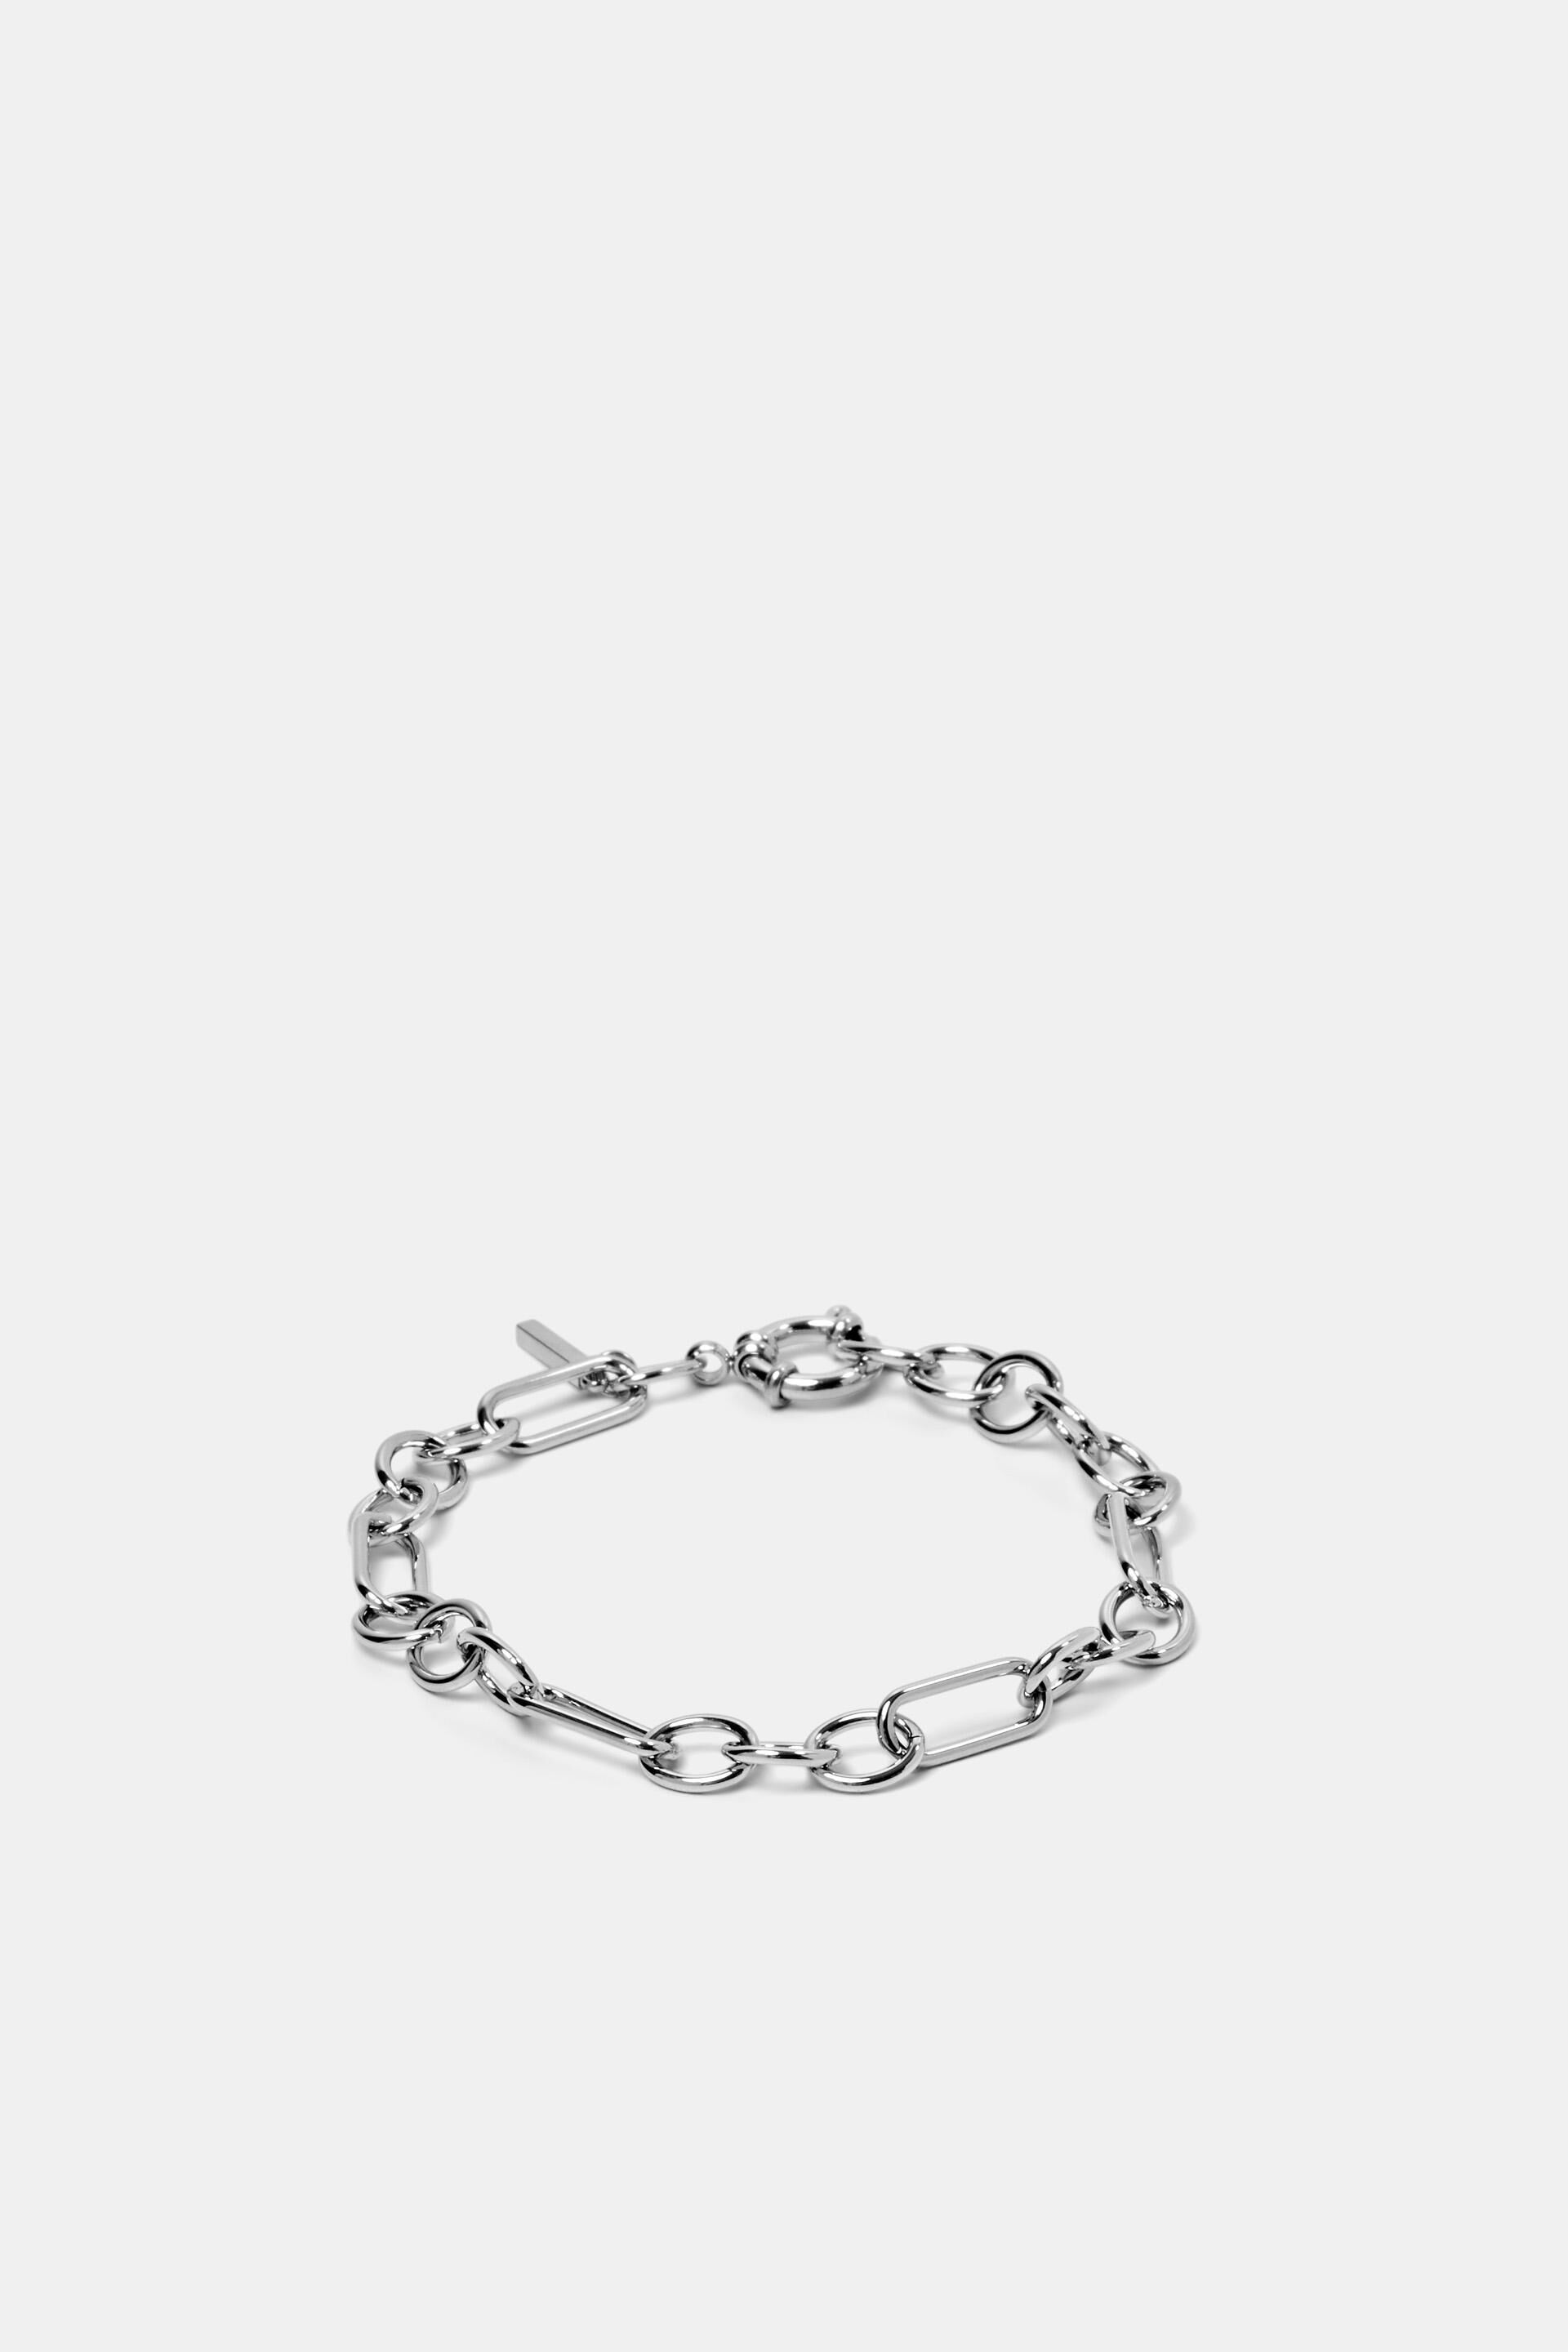 Esprit steel Link stainless bracelet,